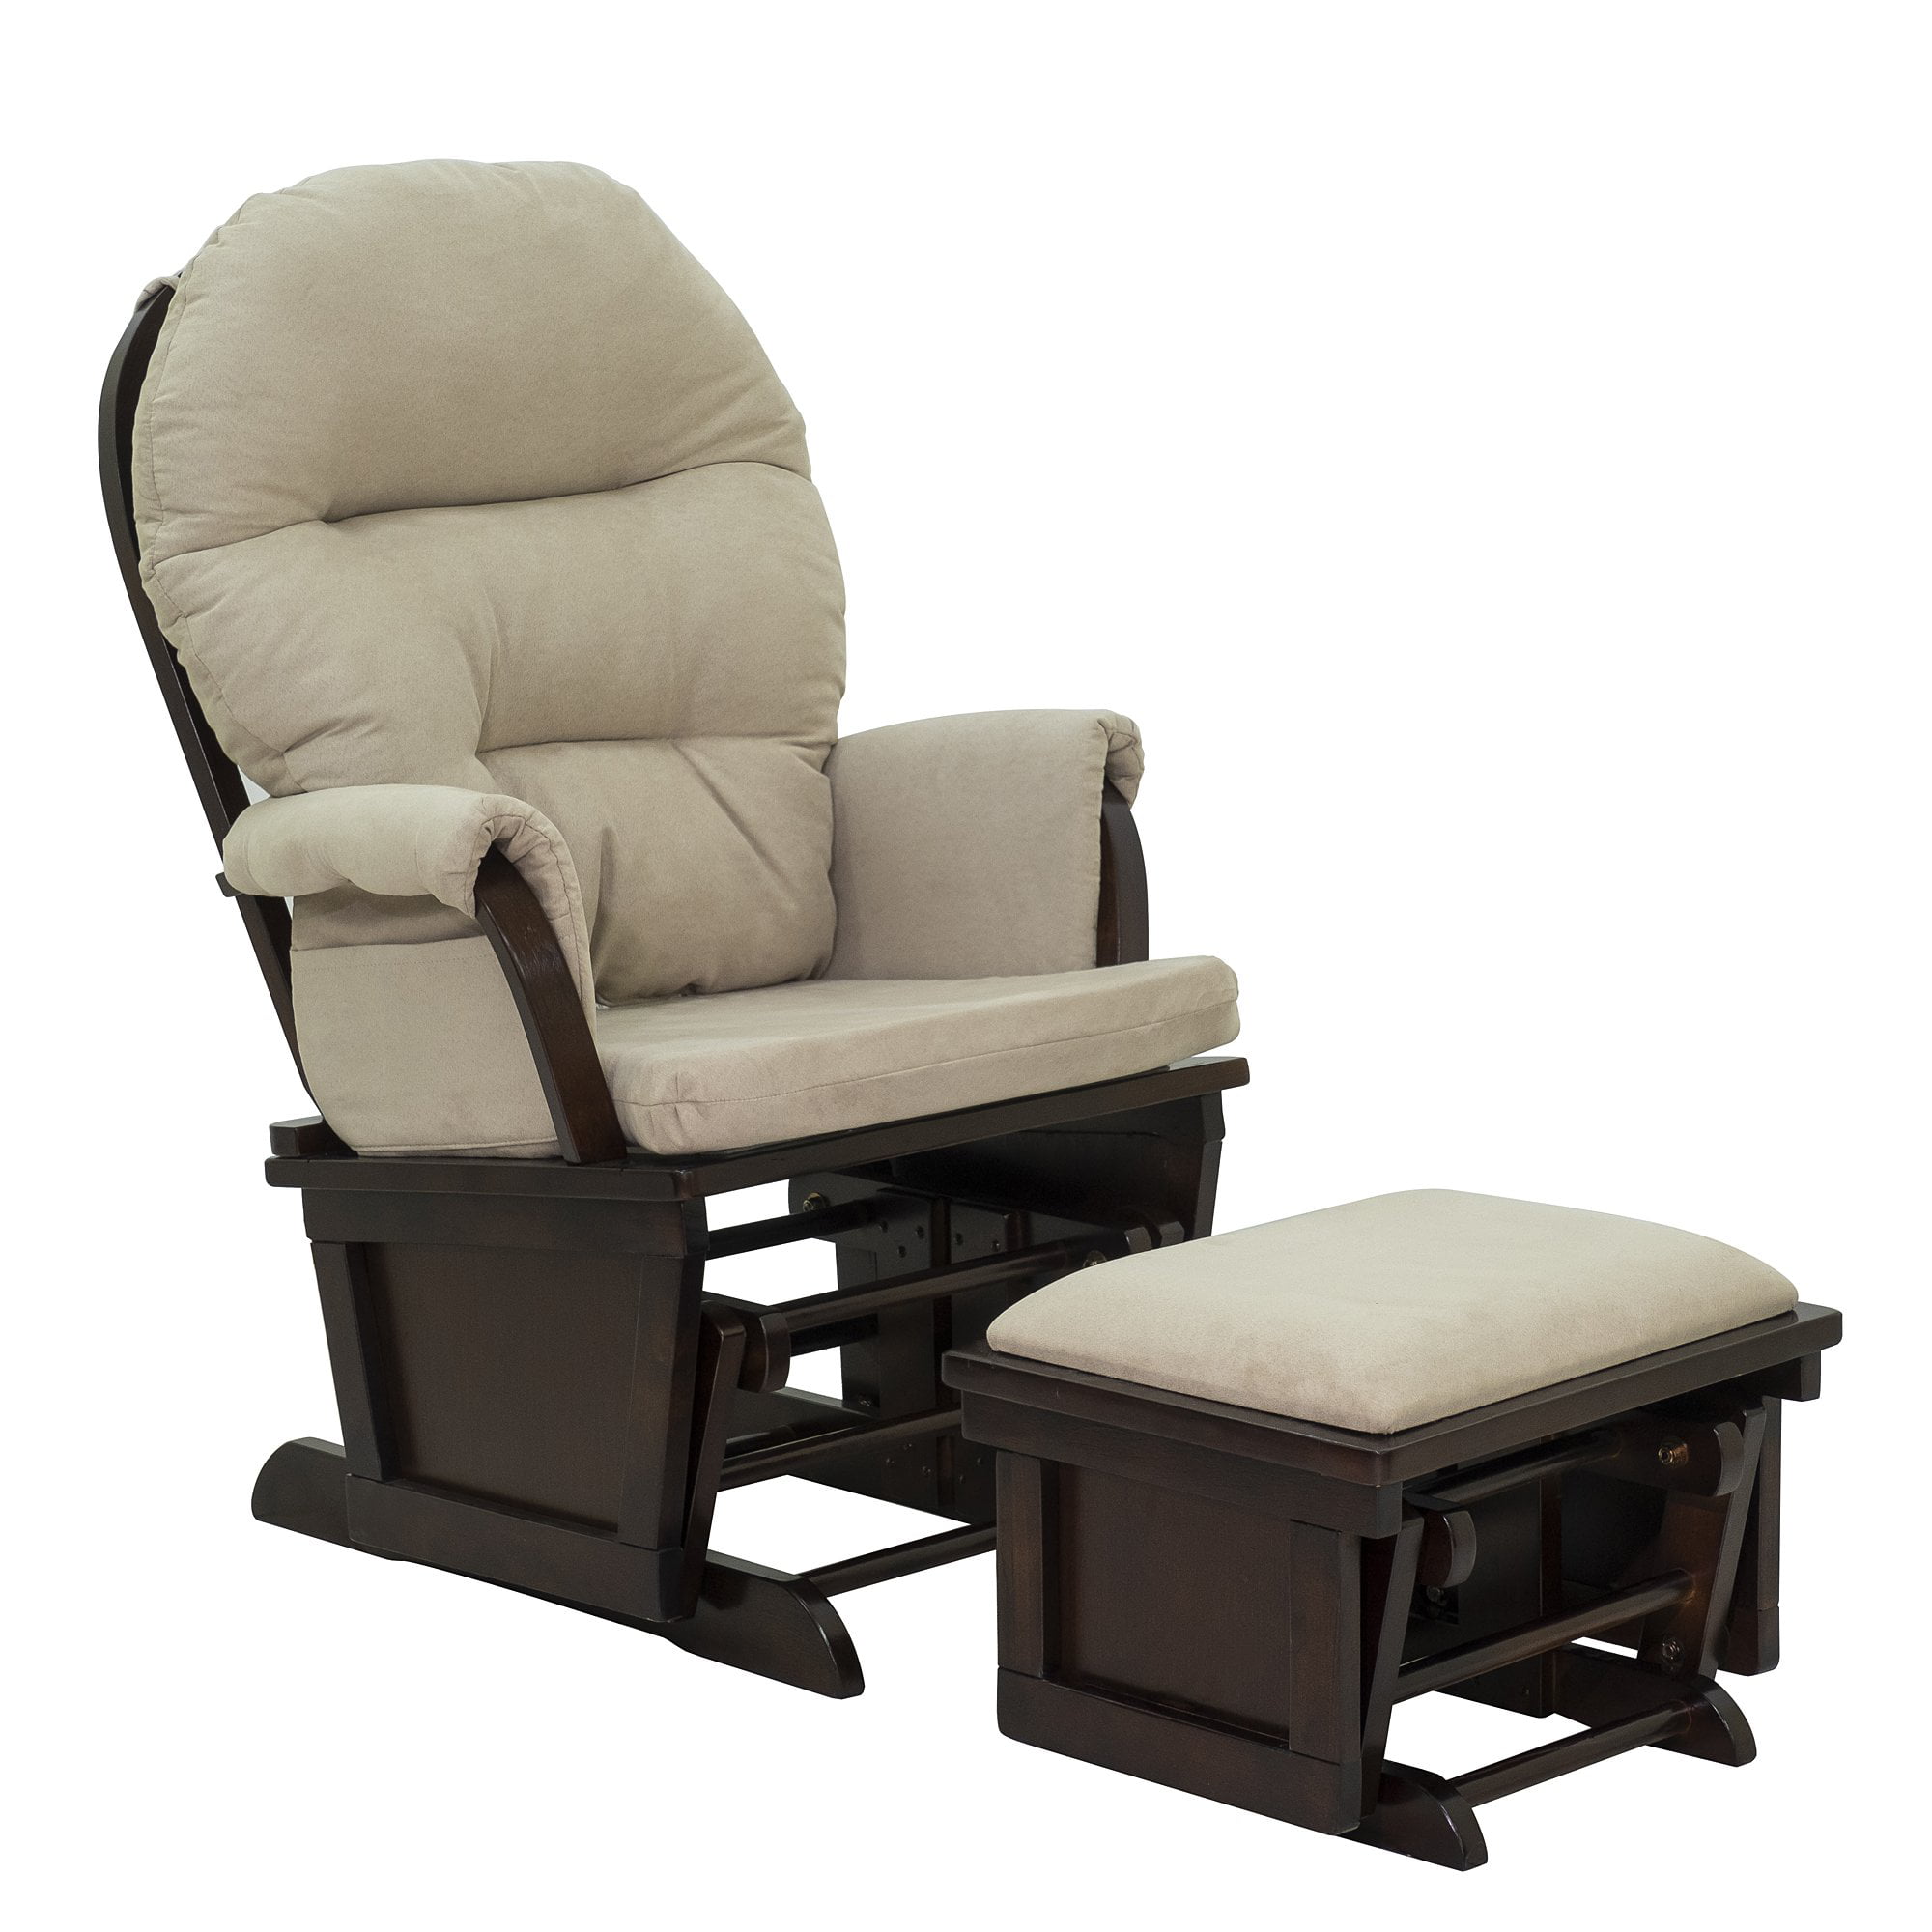 Rocking Chairs Gliders Nursery Furniture - Image to u